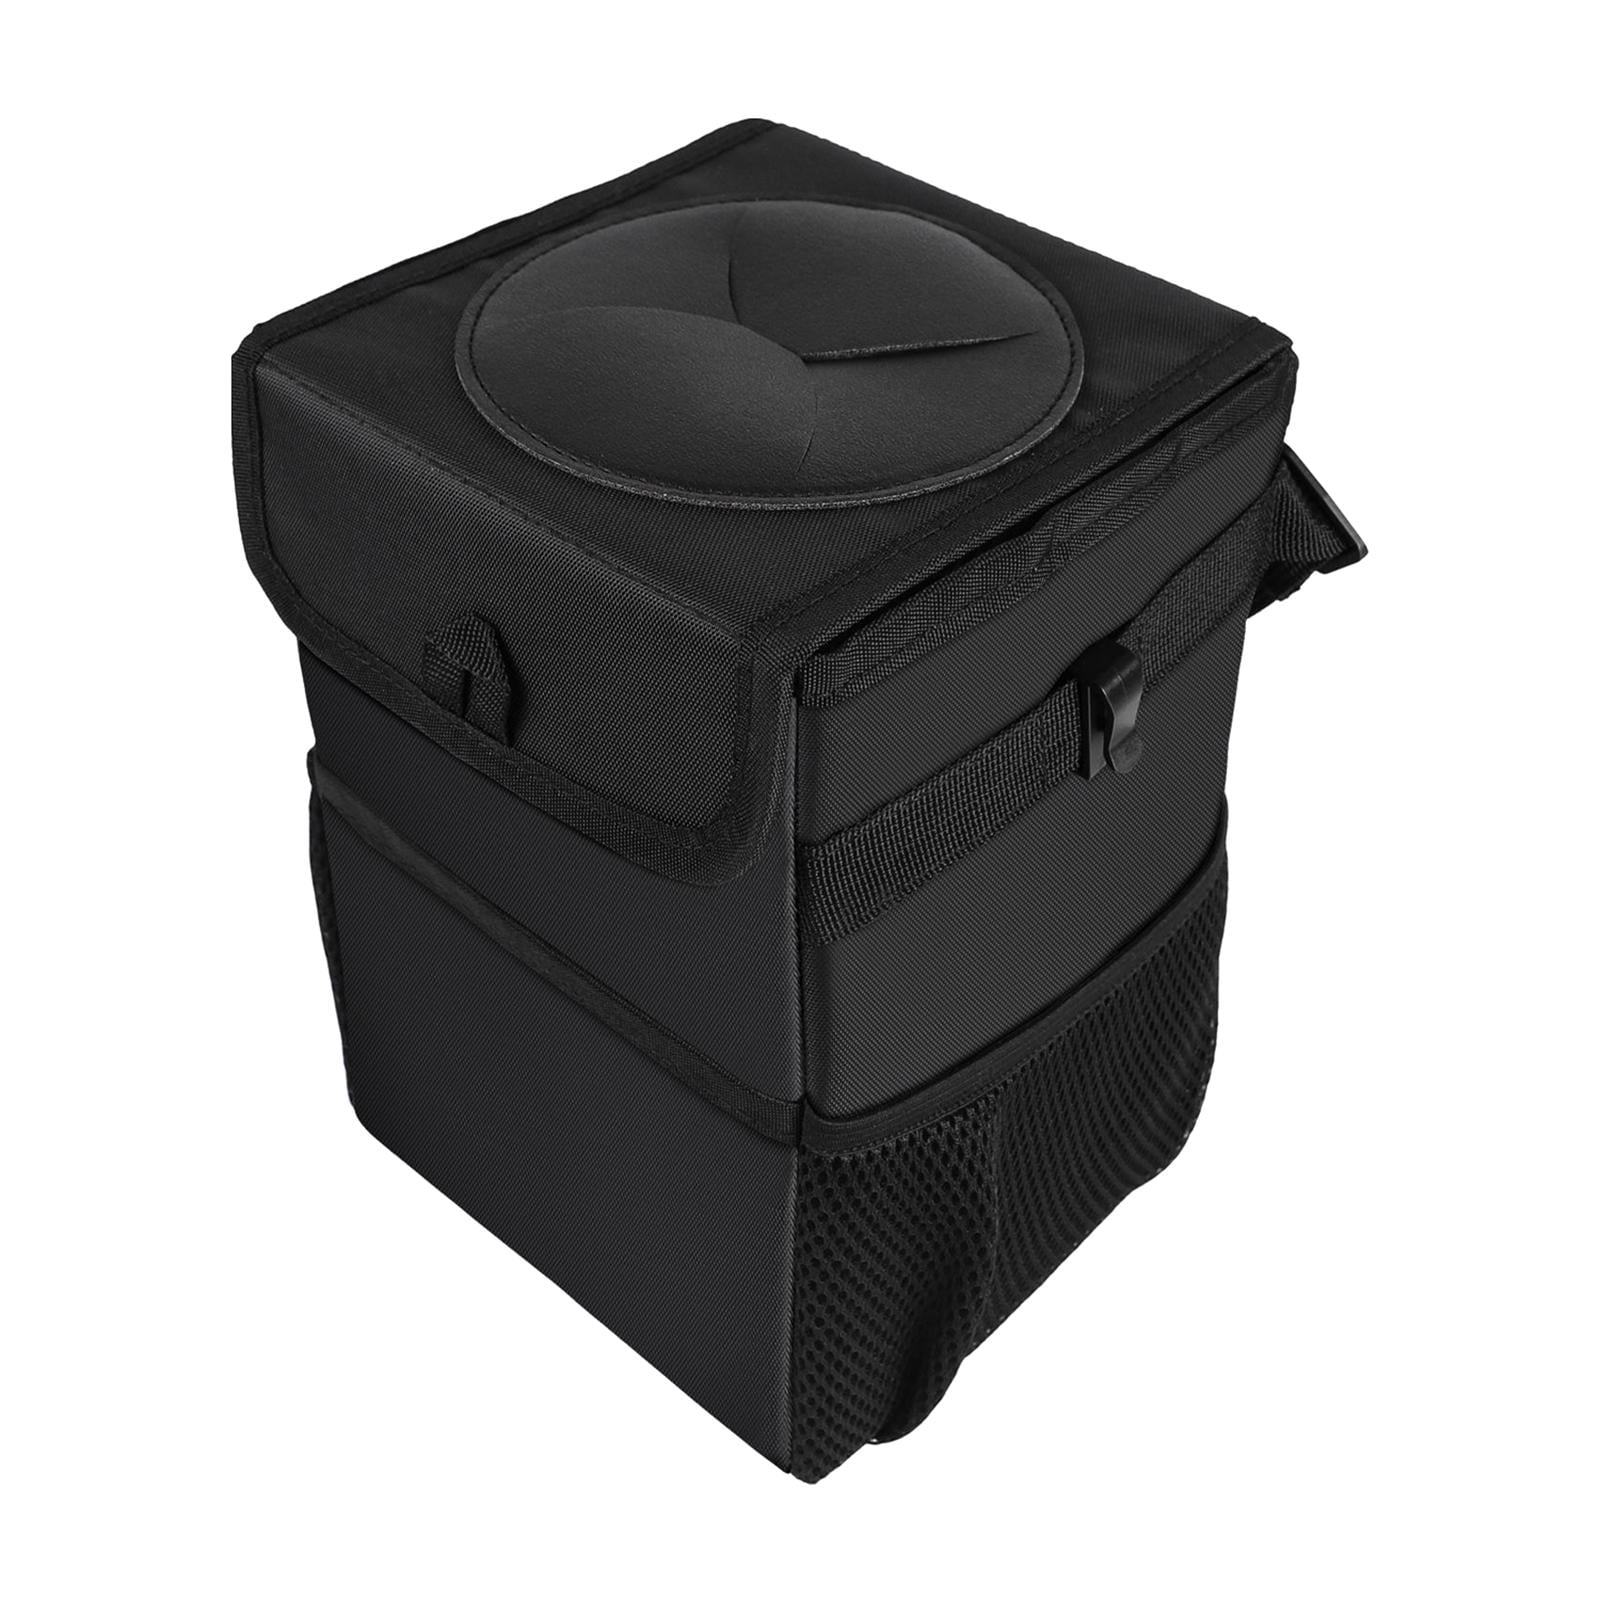 1xCar Can Litter Garbage Leak Proof Bin Wastebasket Holder Container Storage Box 